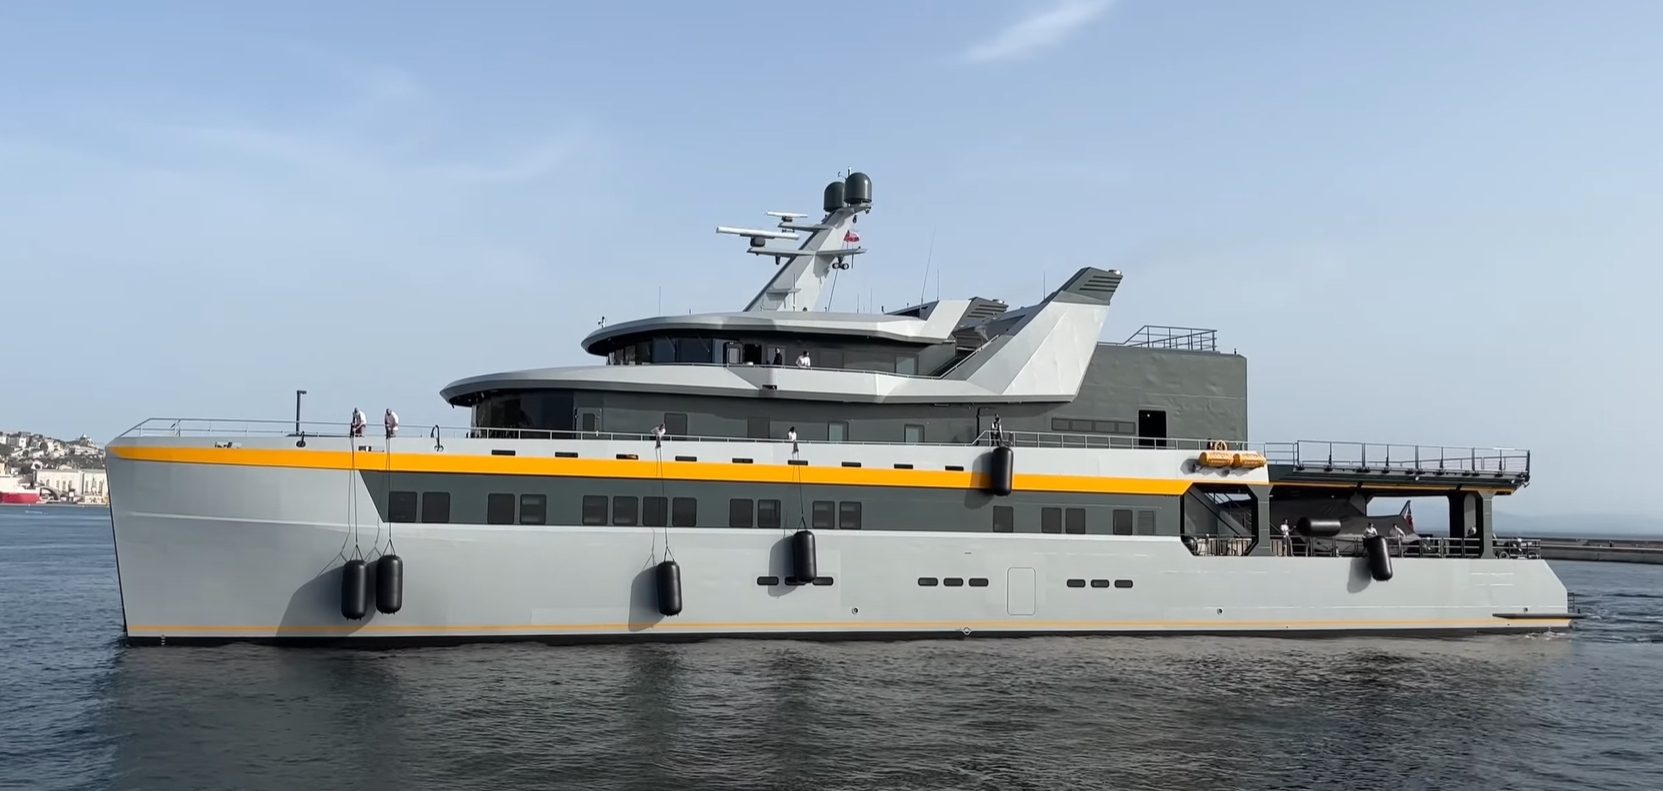 NEBULA Yacht • Jan Koum $40M Support Vessel • Astilleros Armon • 2022